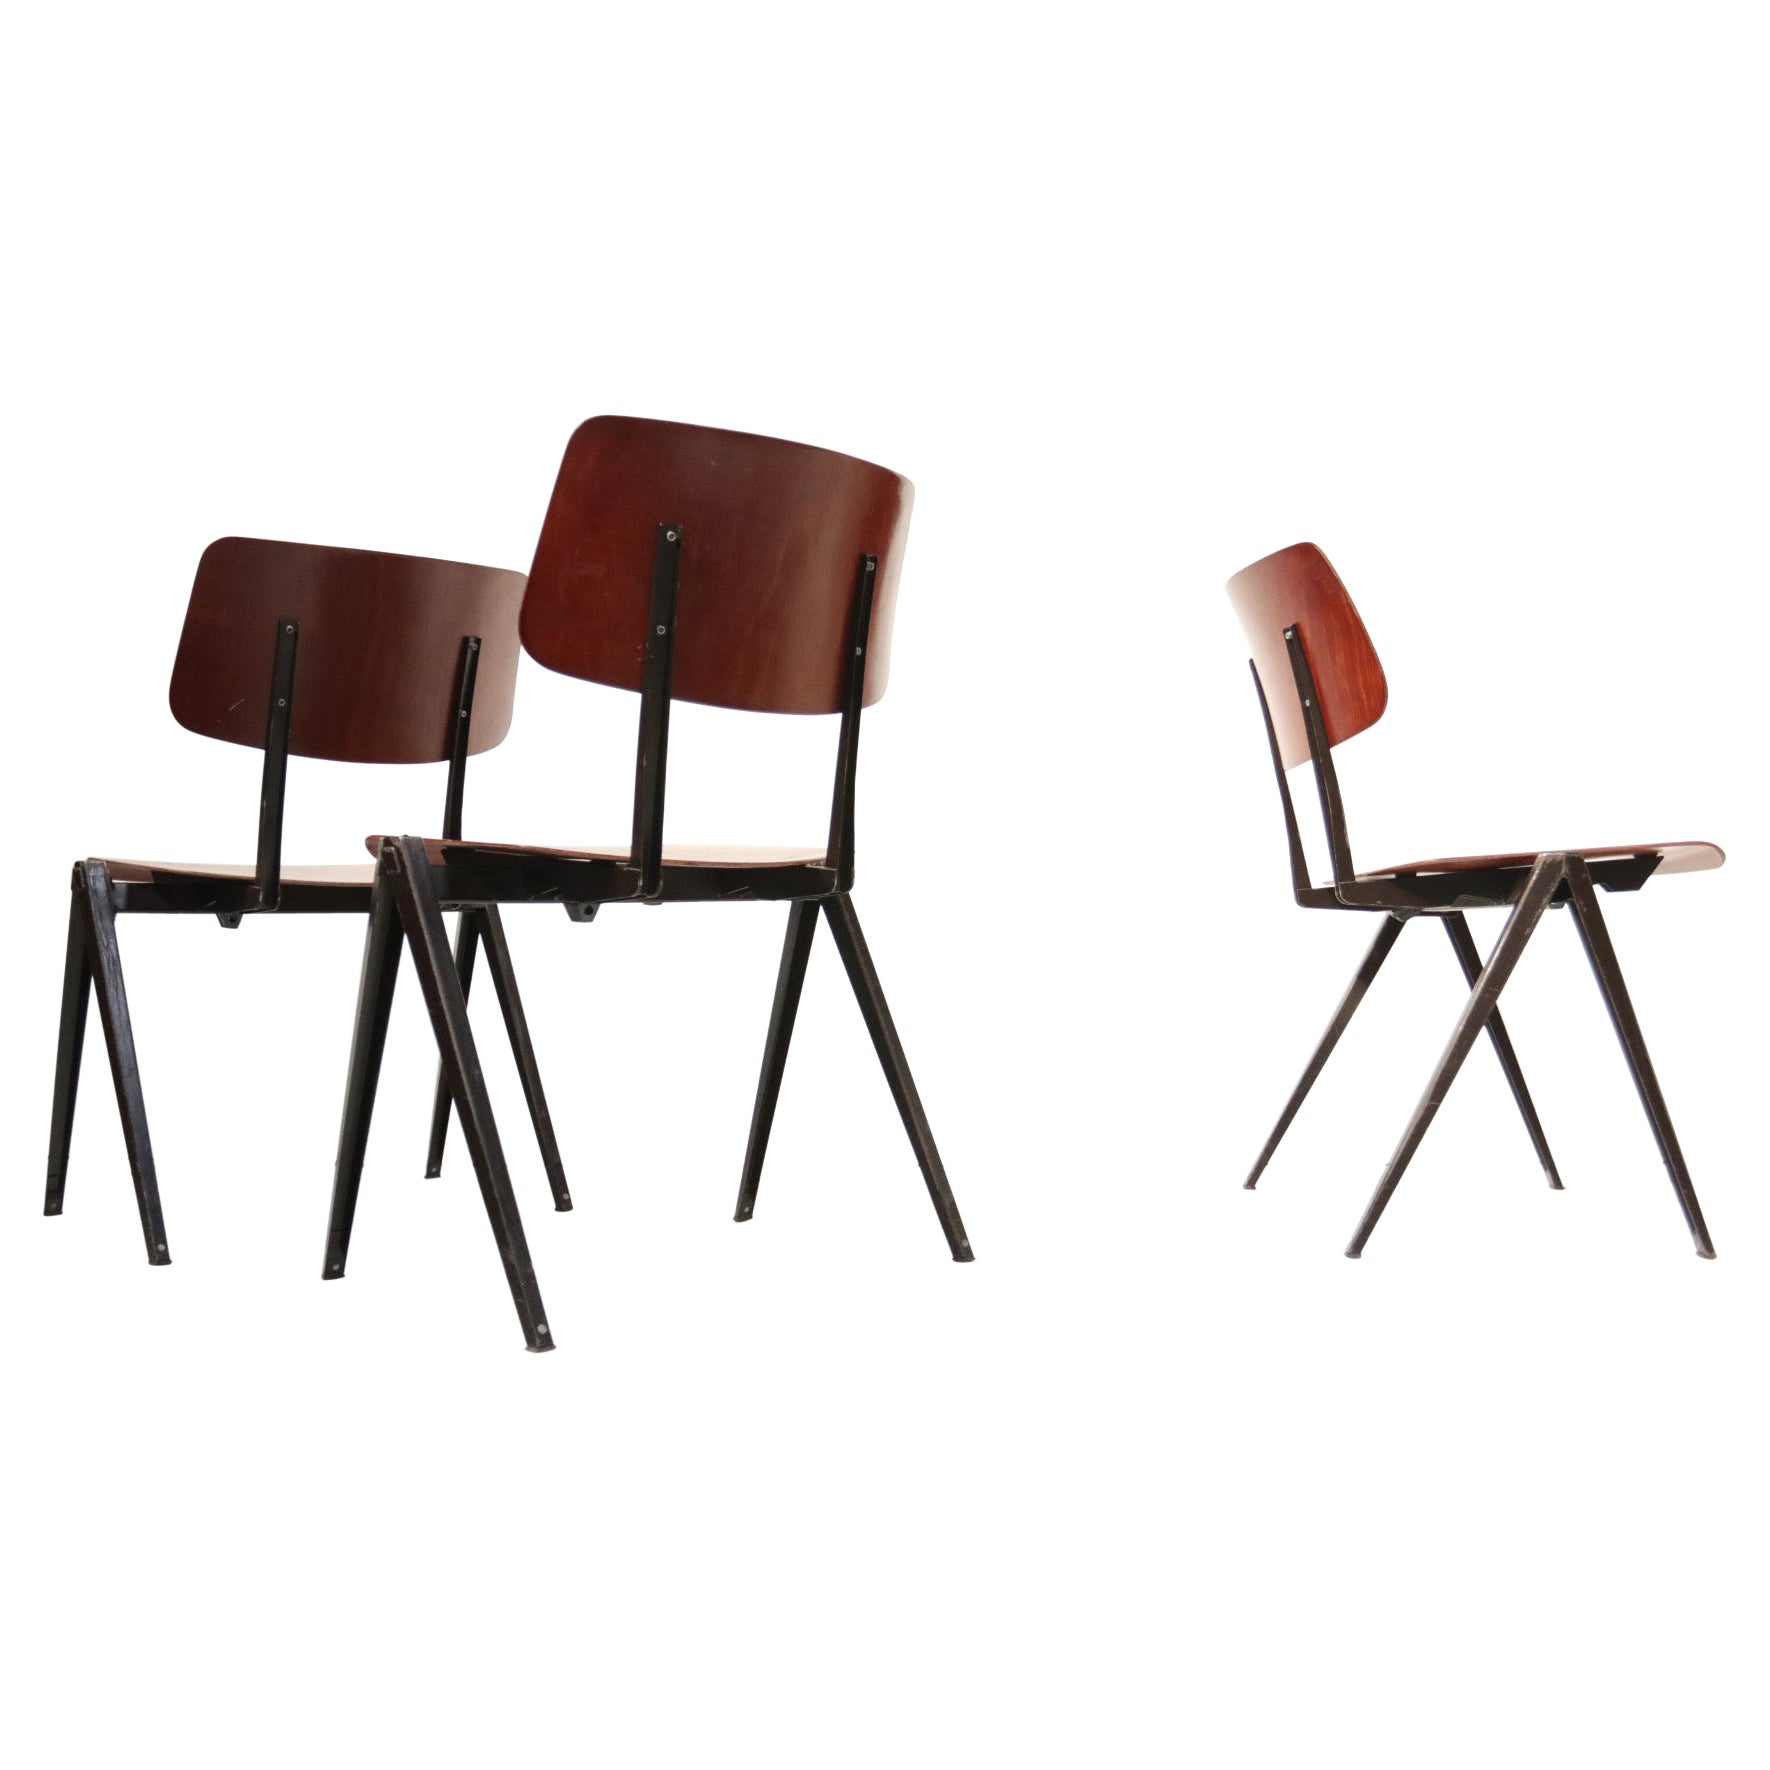 Dutch Industrial Design Prouve Style School Chairs S21 Compas Galvanitas